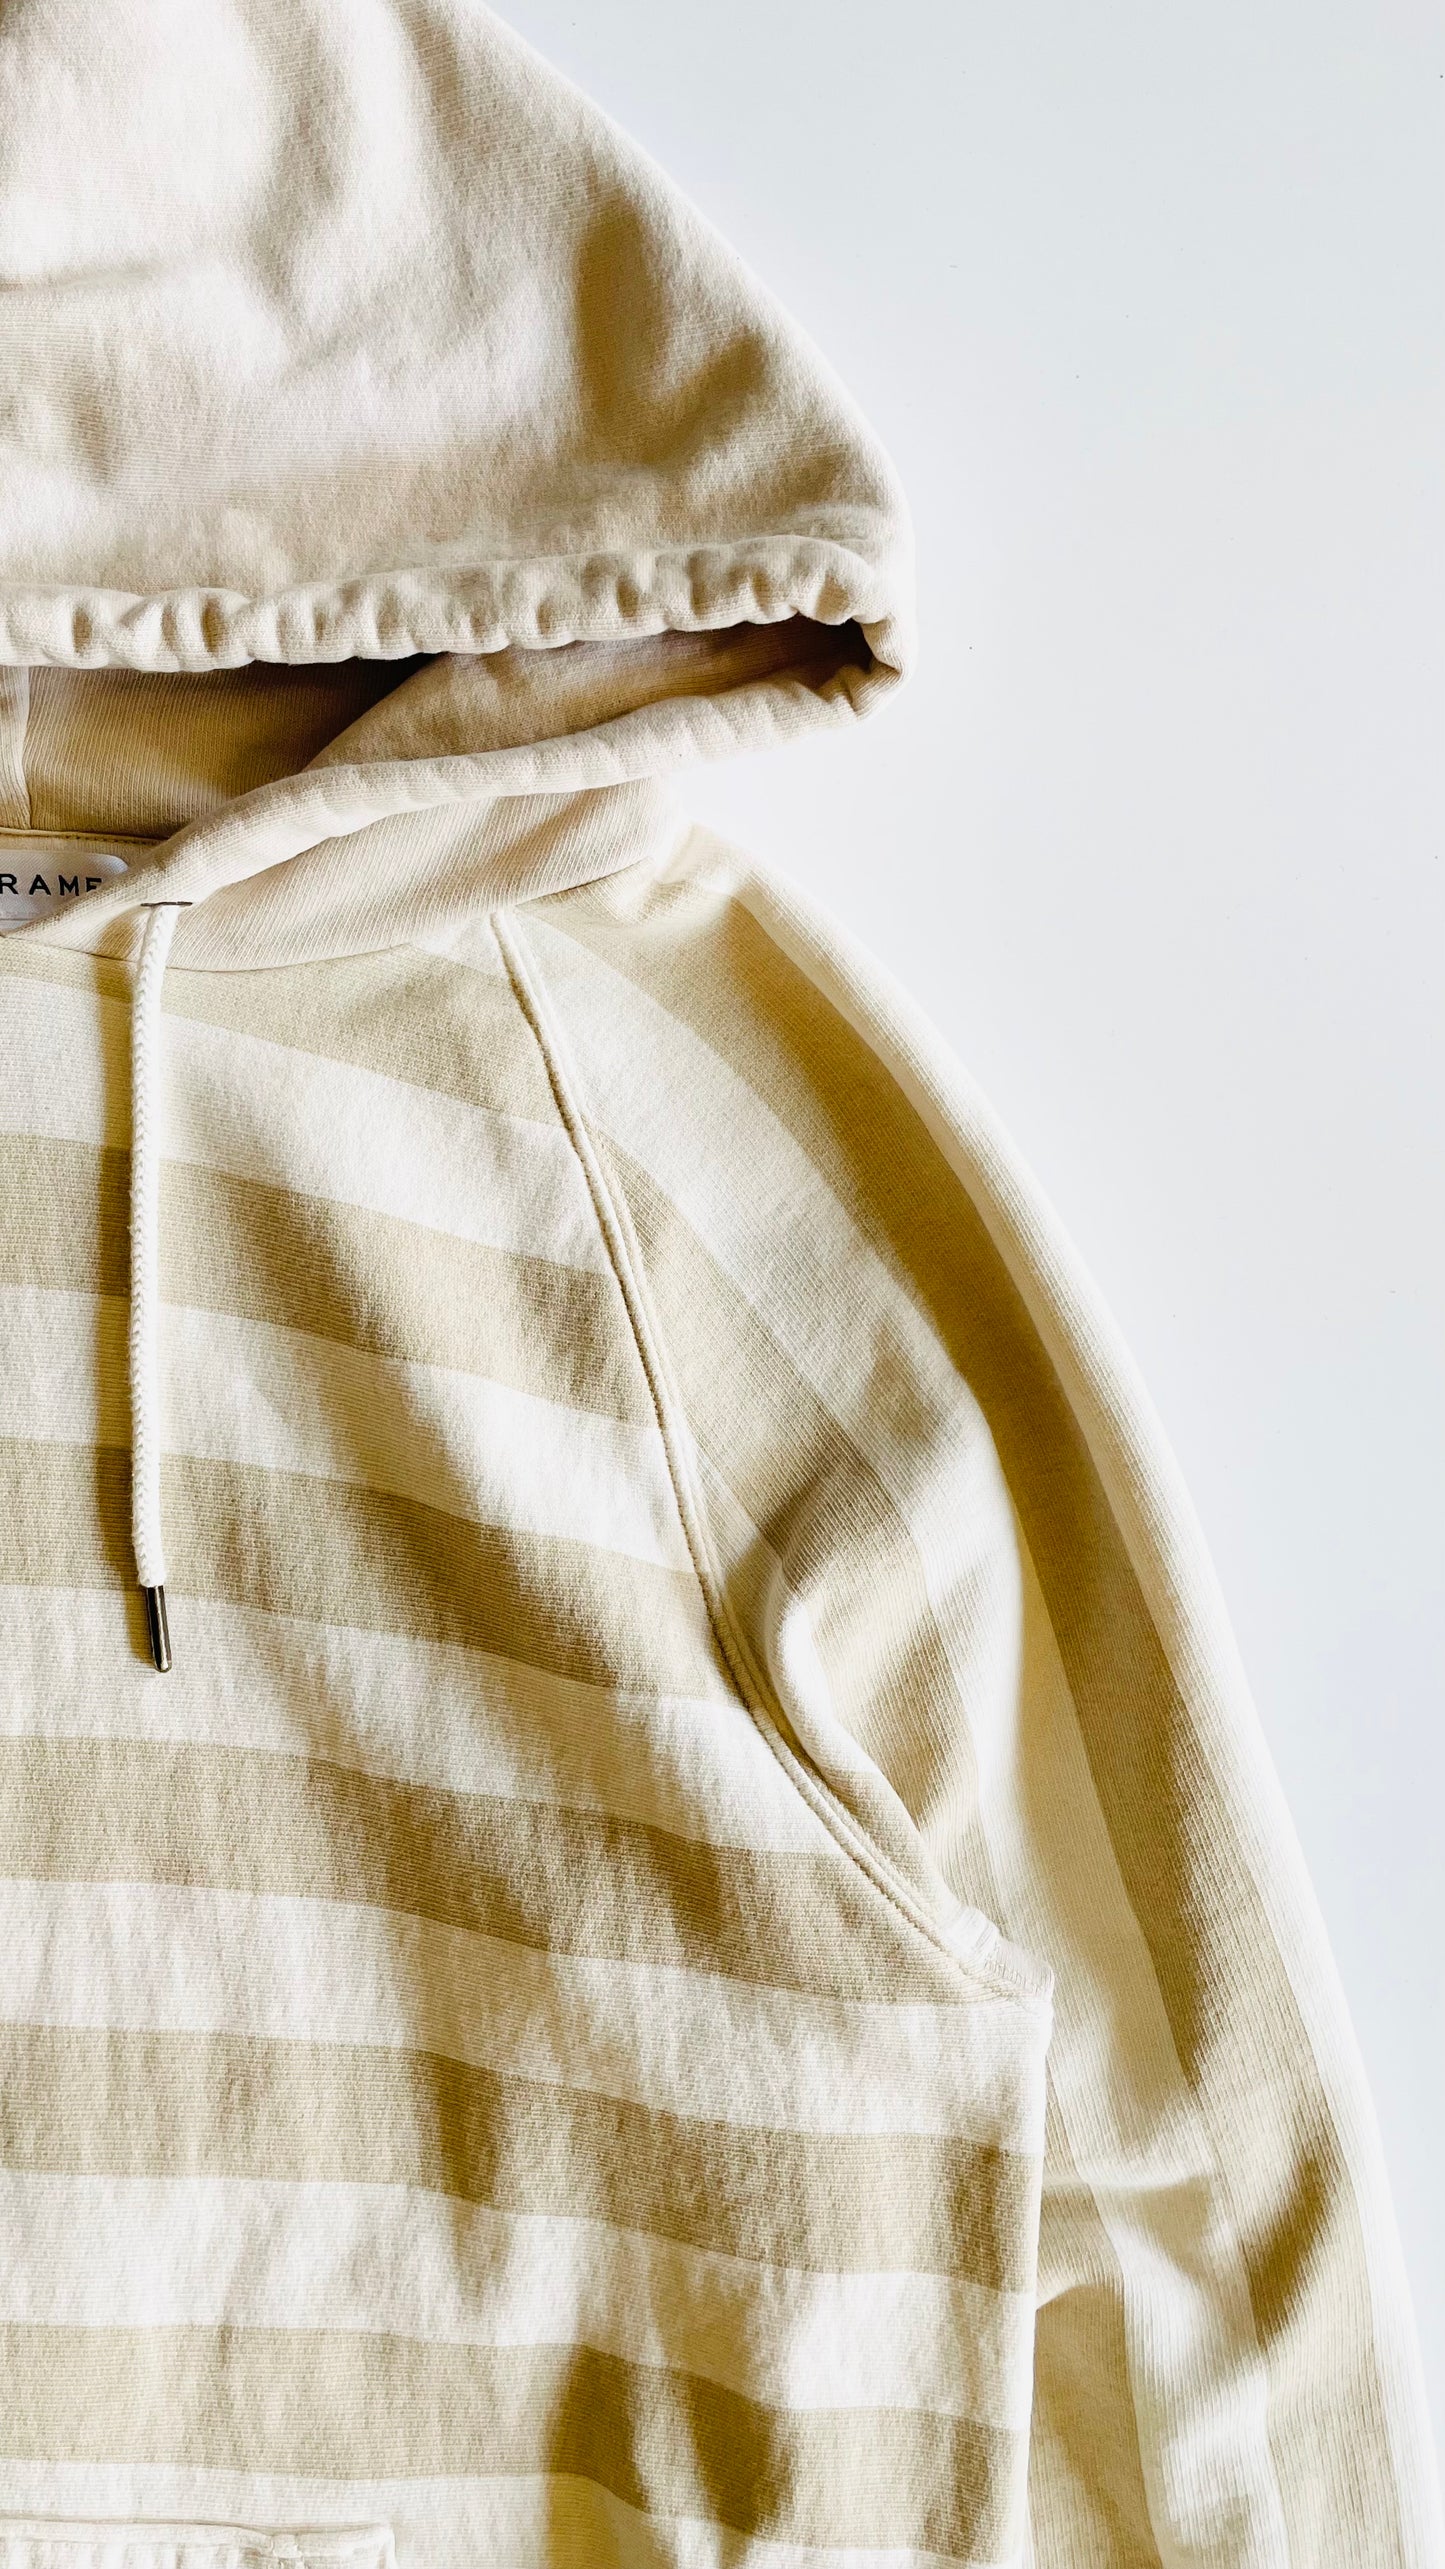 Pre-Loved FRAME striped cream and beige hoodie sweatshirt - Size M